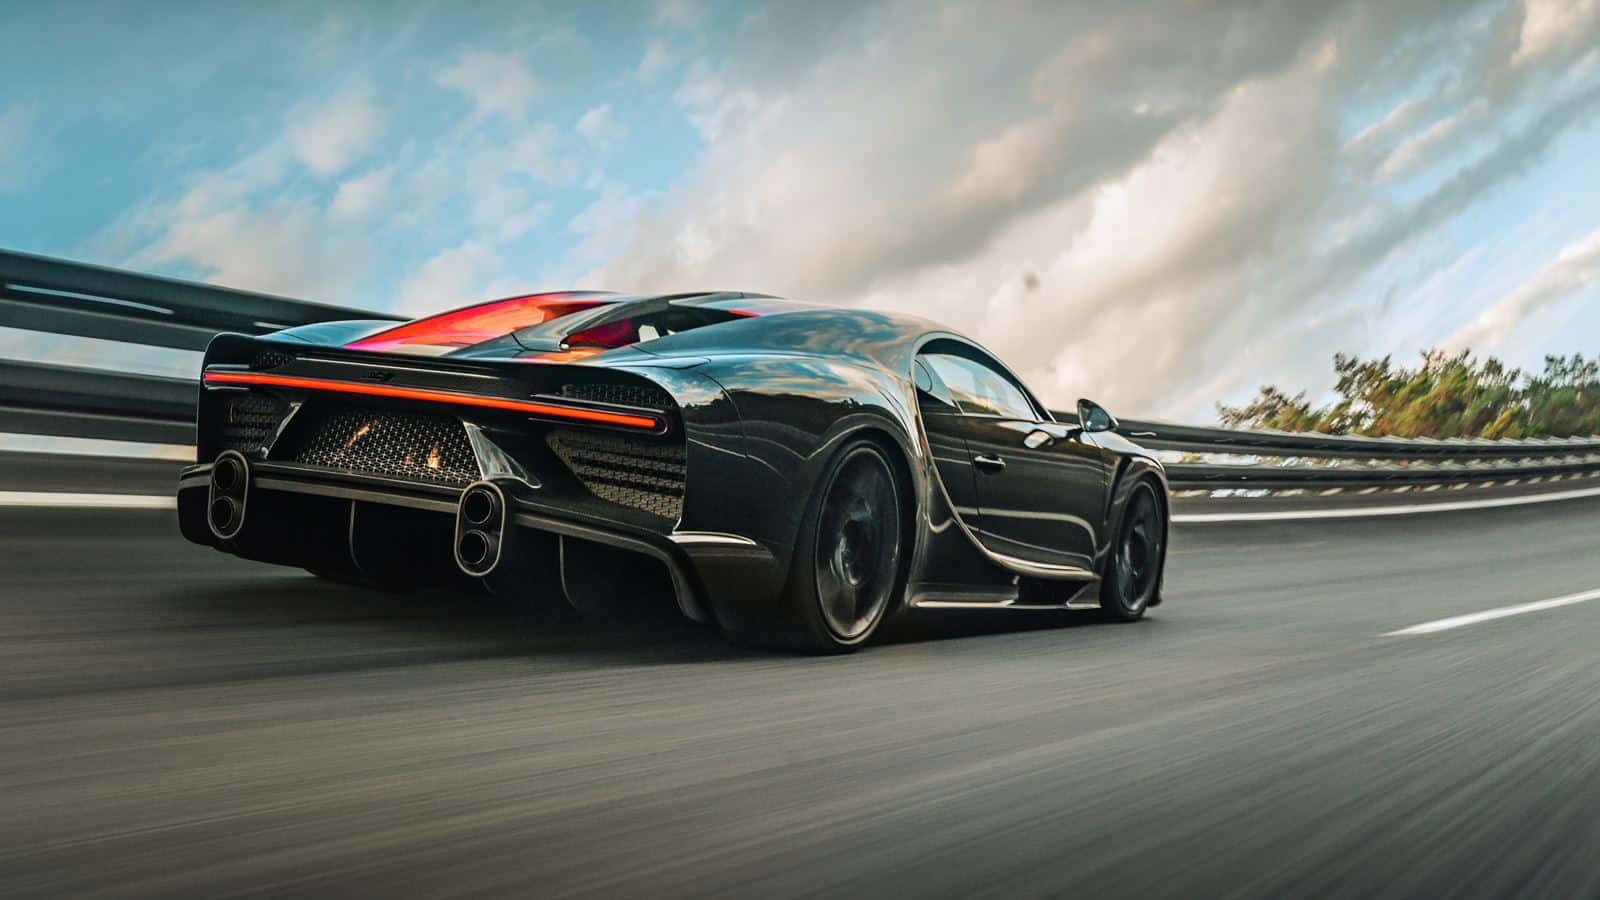 https://www.autonocion.com/wp-content/uploads/2022/07/Bugatti-Chiron-Super-Sport-300-3.jpg